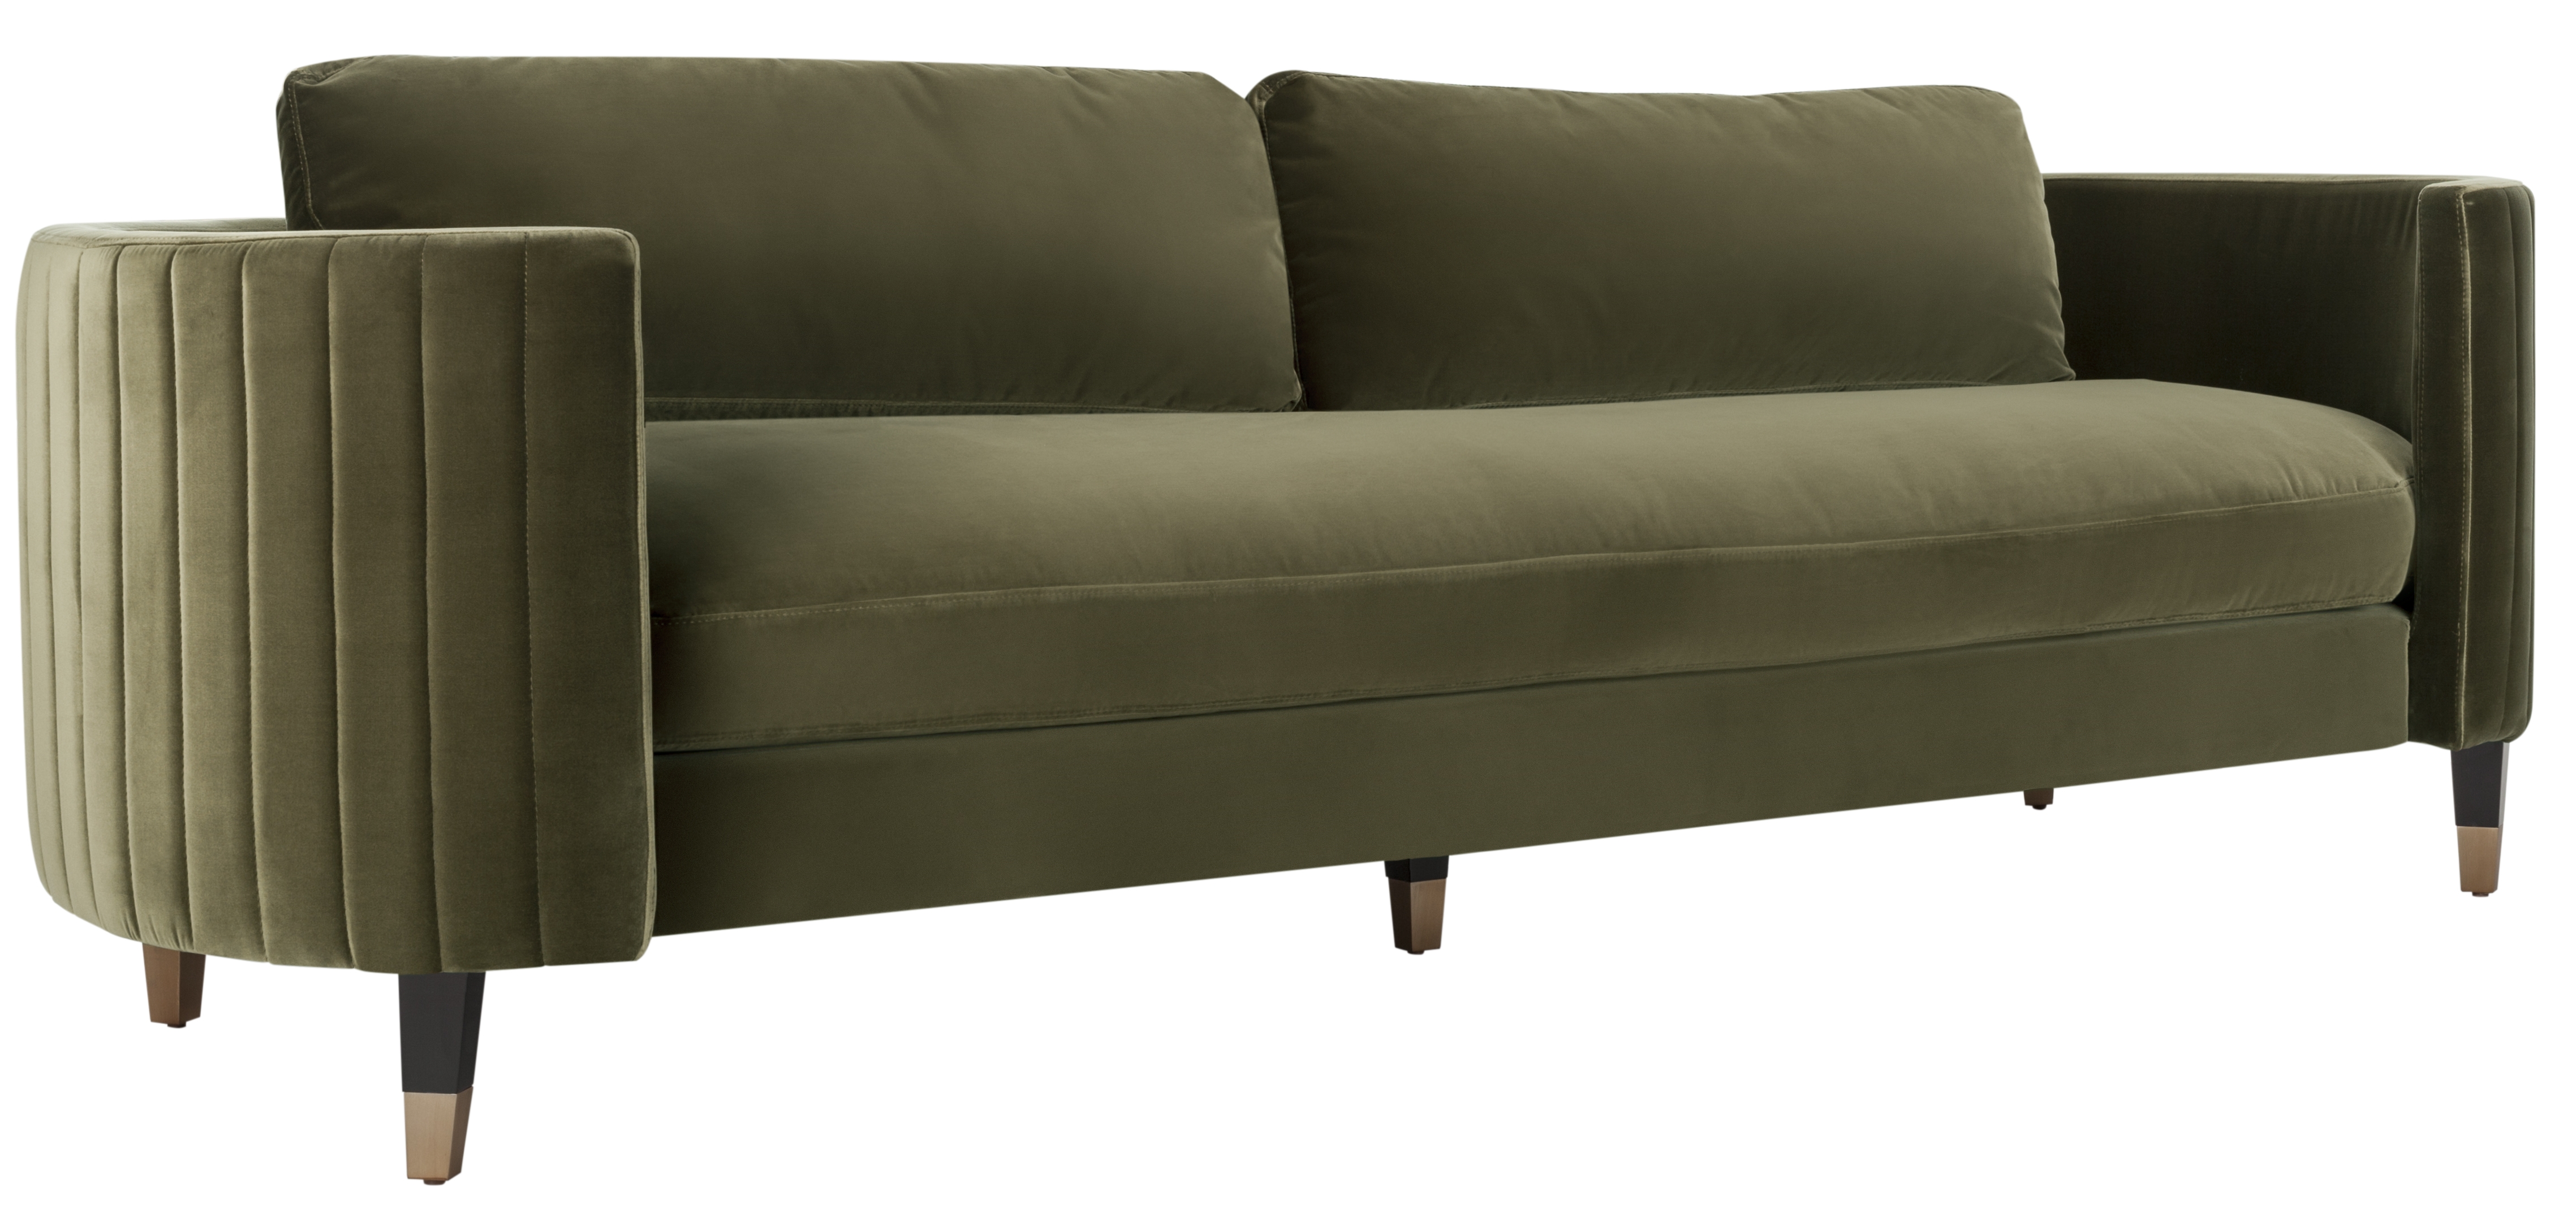 Winford Velvet Sofa - Giotto Dark Olive Green - Arlo Home - Image 1